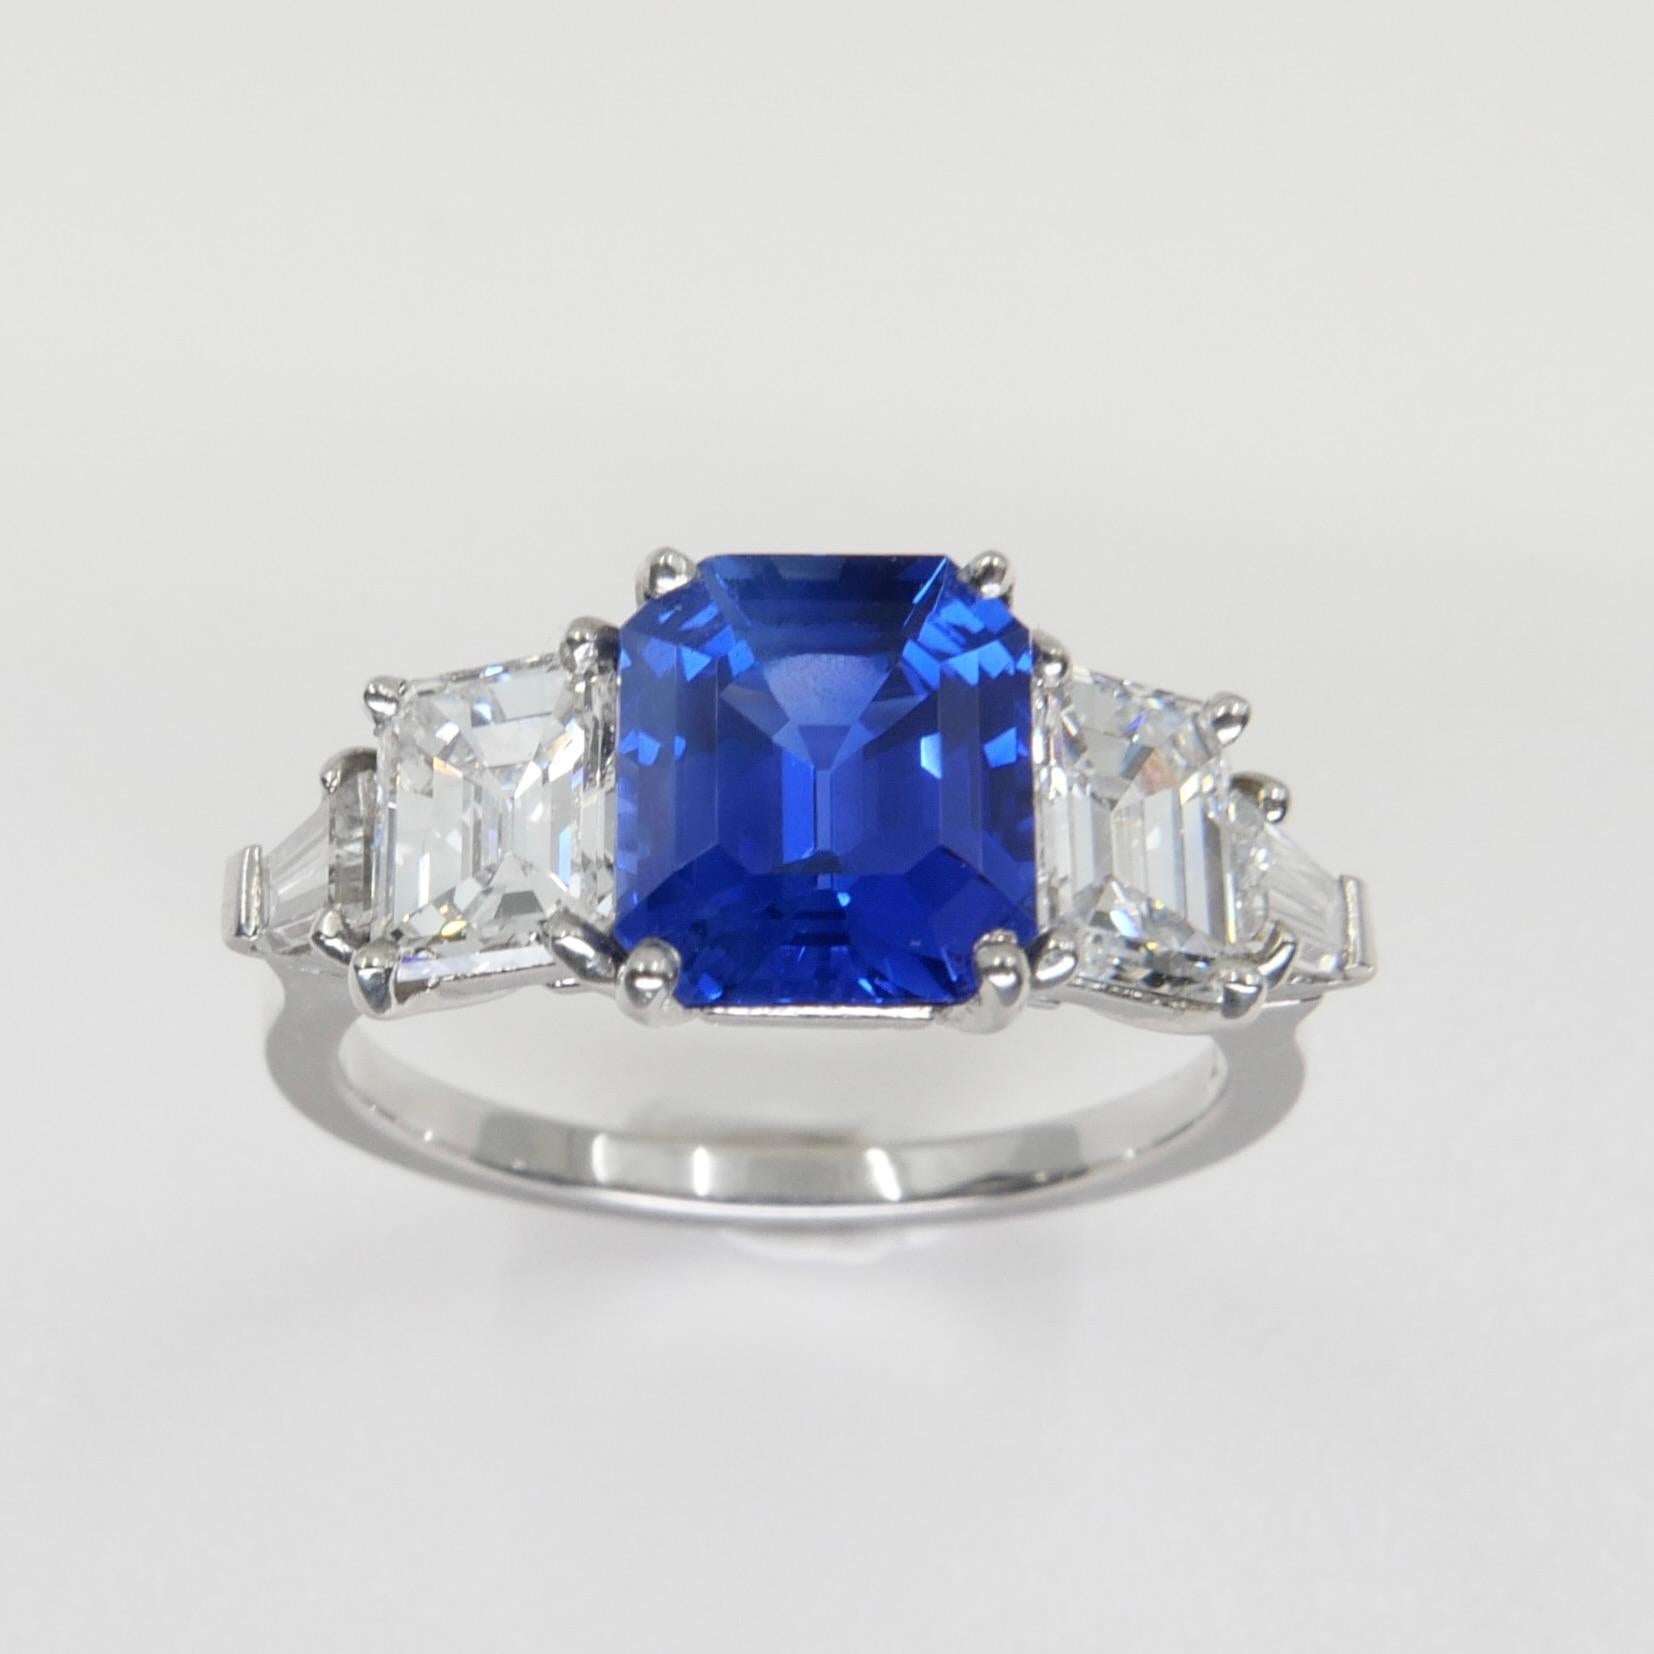 Certified Kashmir No Heat Sapphire & Diamond Ring, SSEF & Gubelin Labs 1